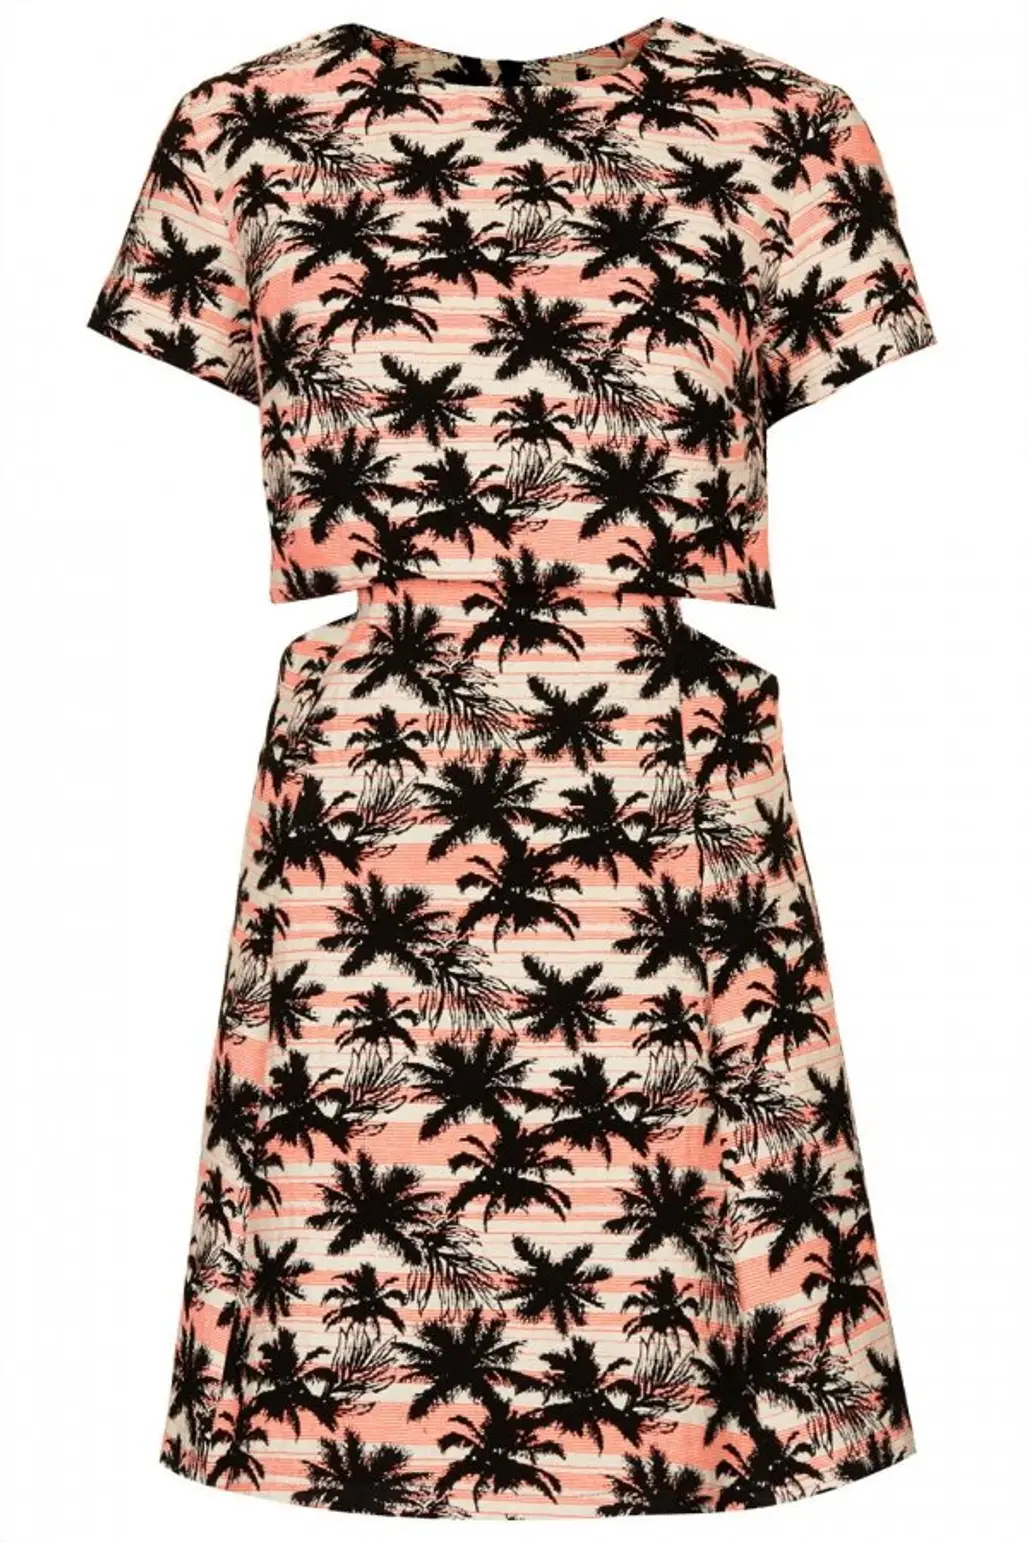 Topshop Palm Print Skater Dress